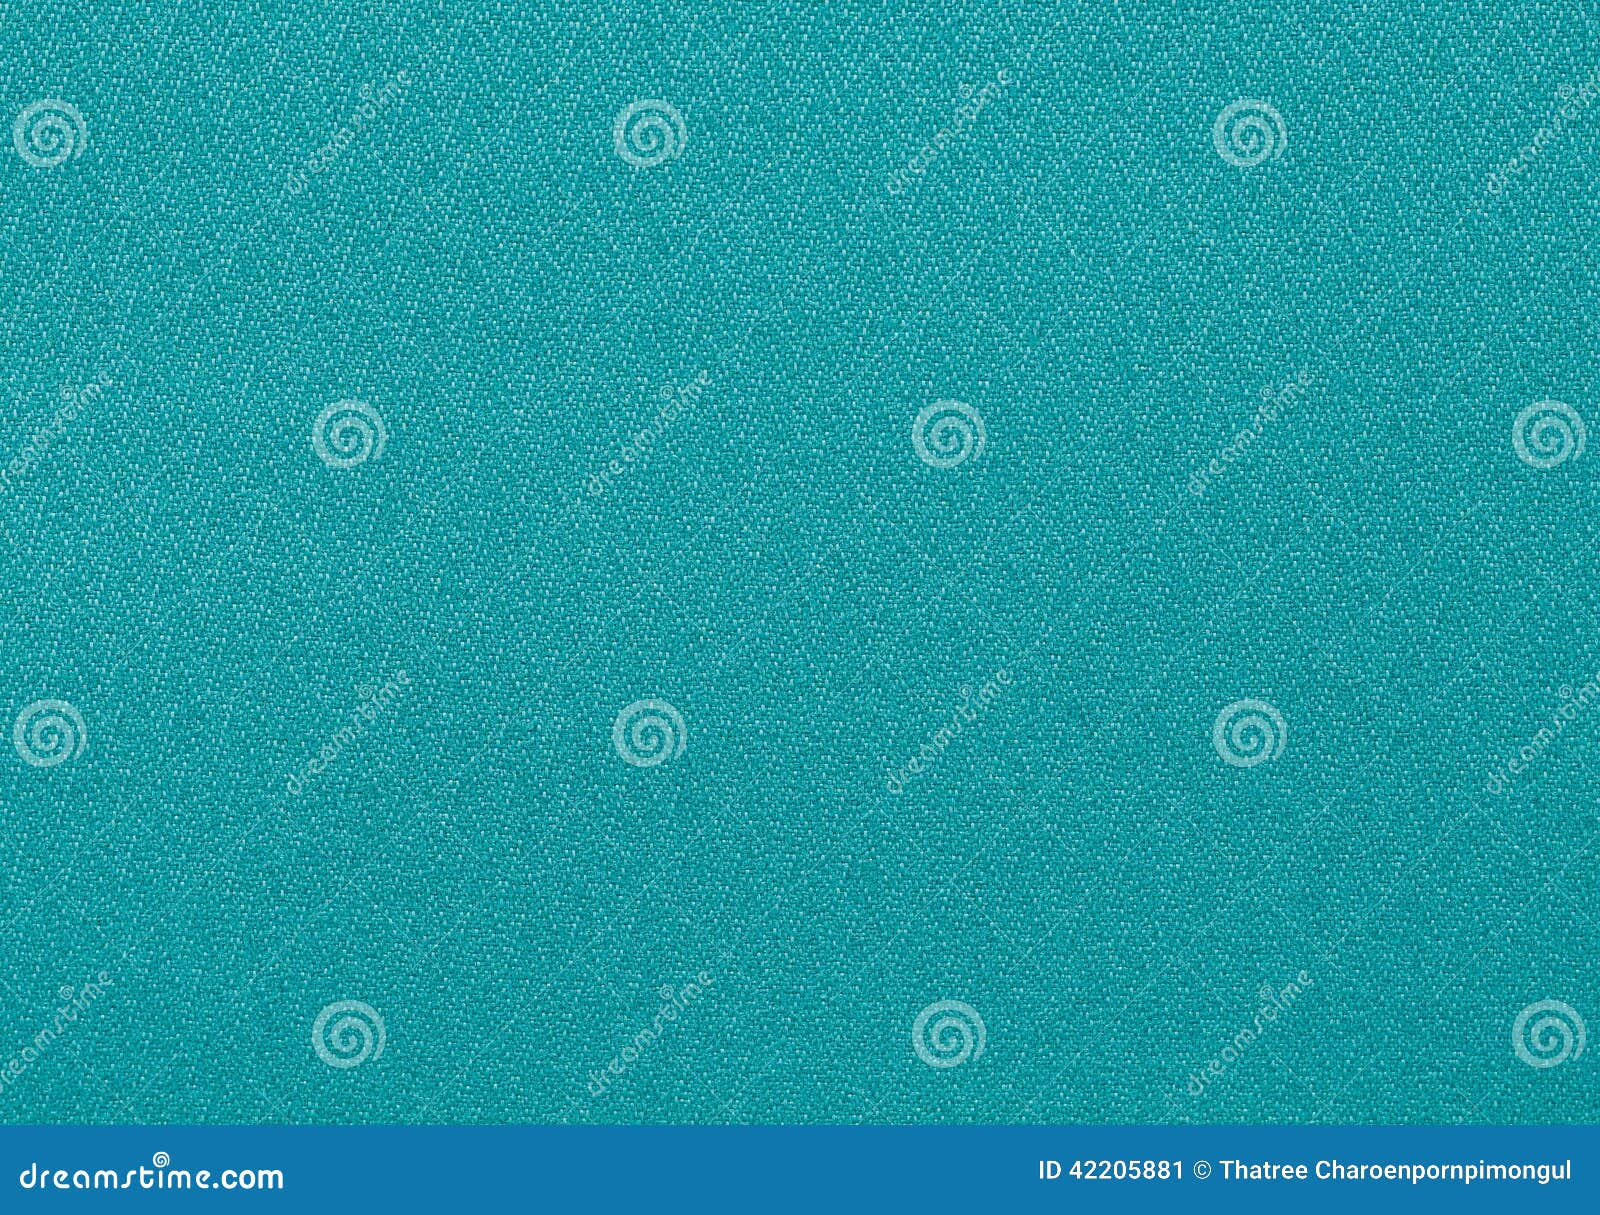 Aquamarine Color Fabric, Wallpaper and Home Decor